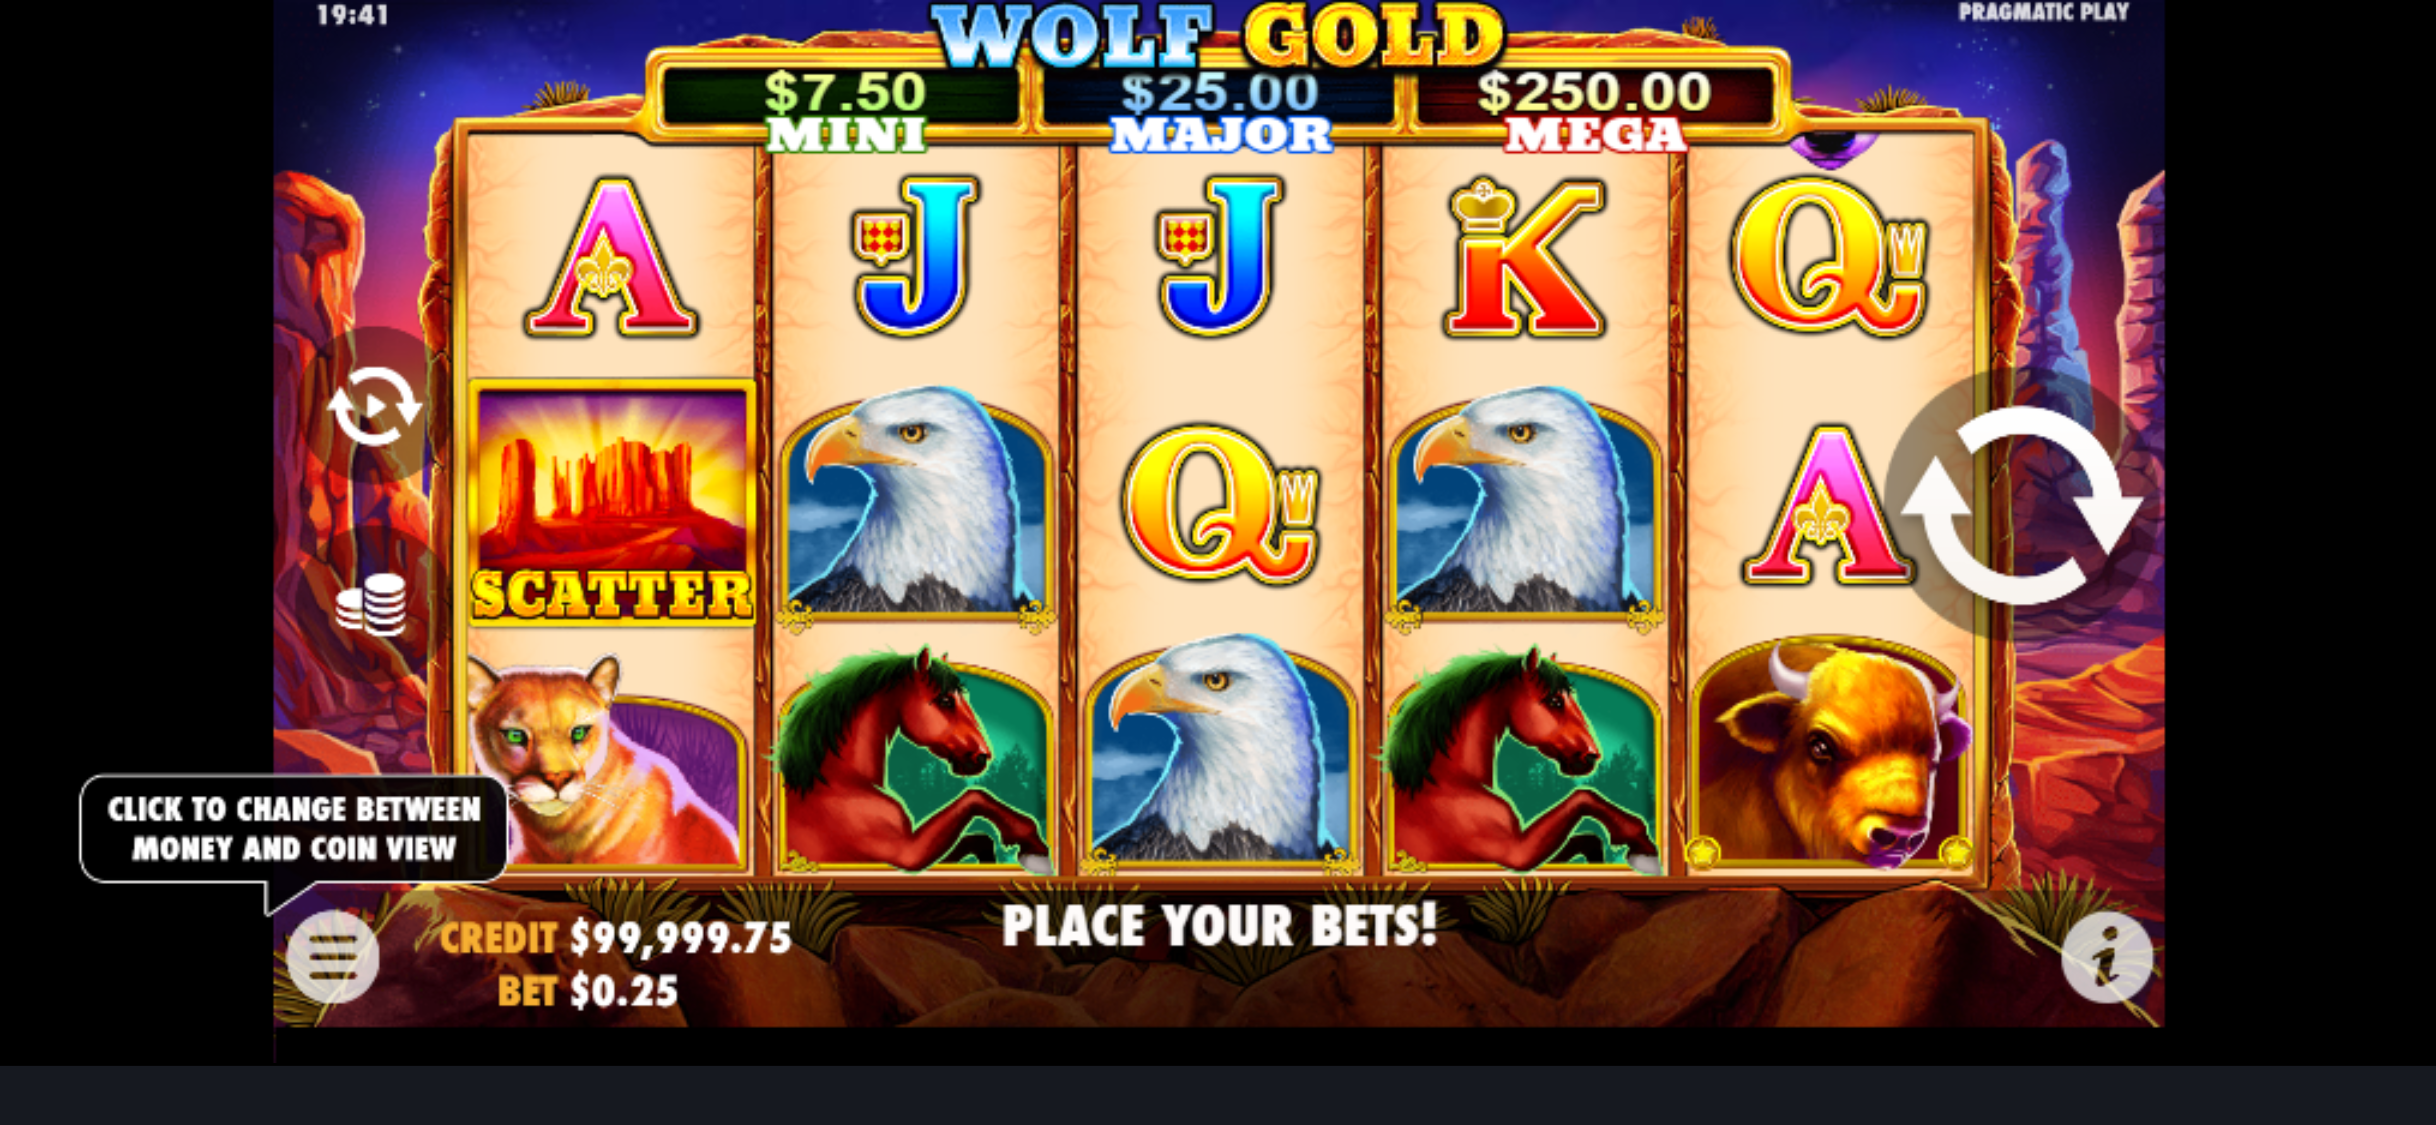 Leon Casino Mobile Slot Games Review